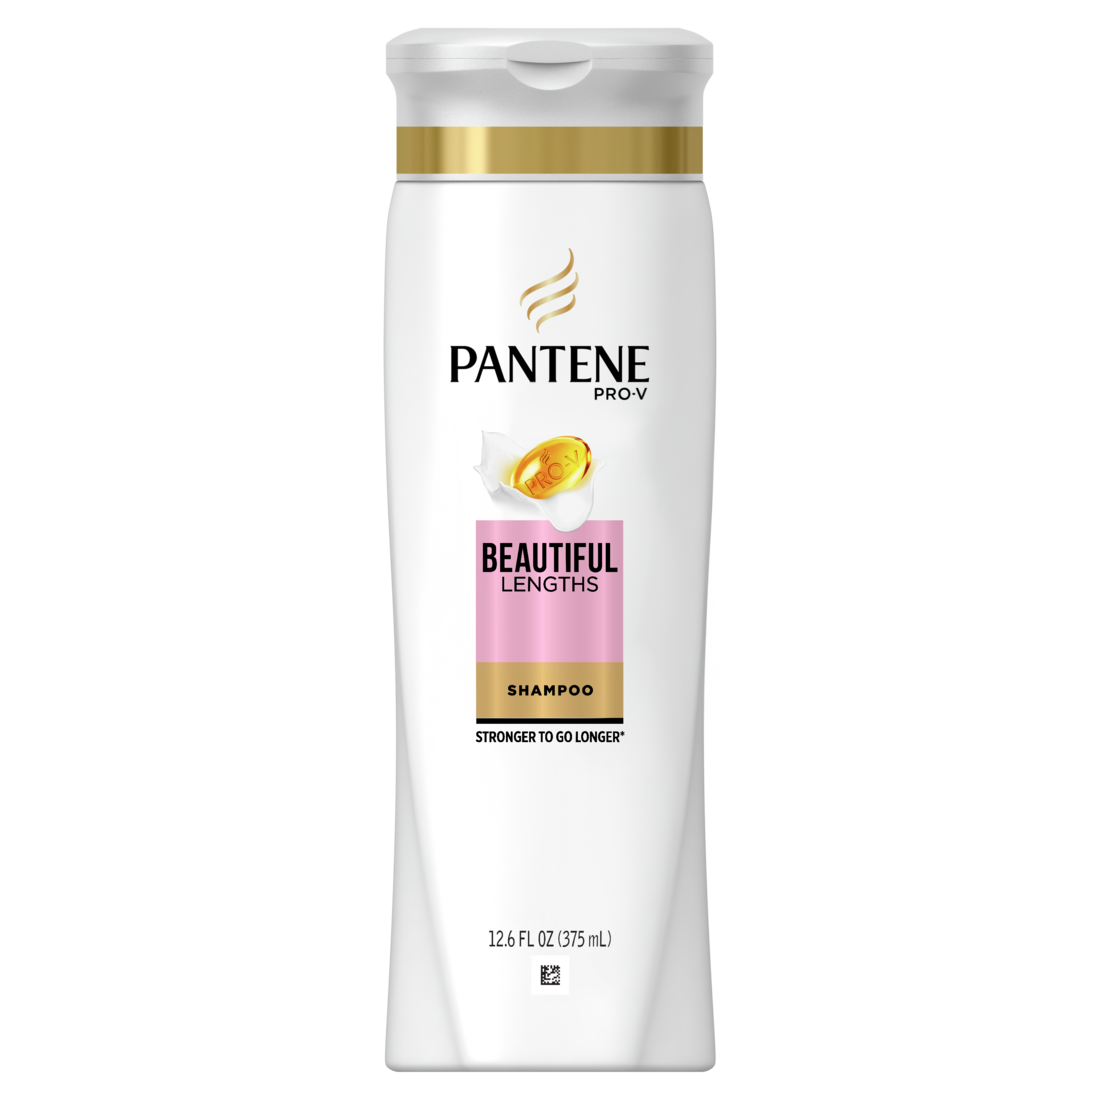 Pantene Shampoo Beautiful Lengths - 12.6oz/6pk